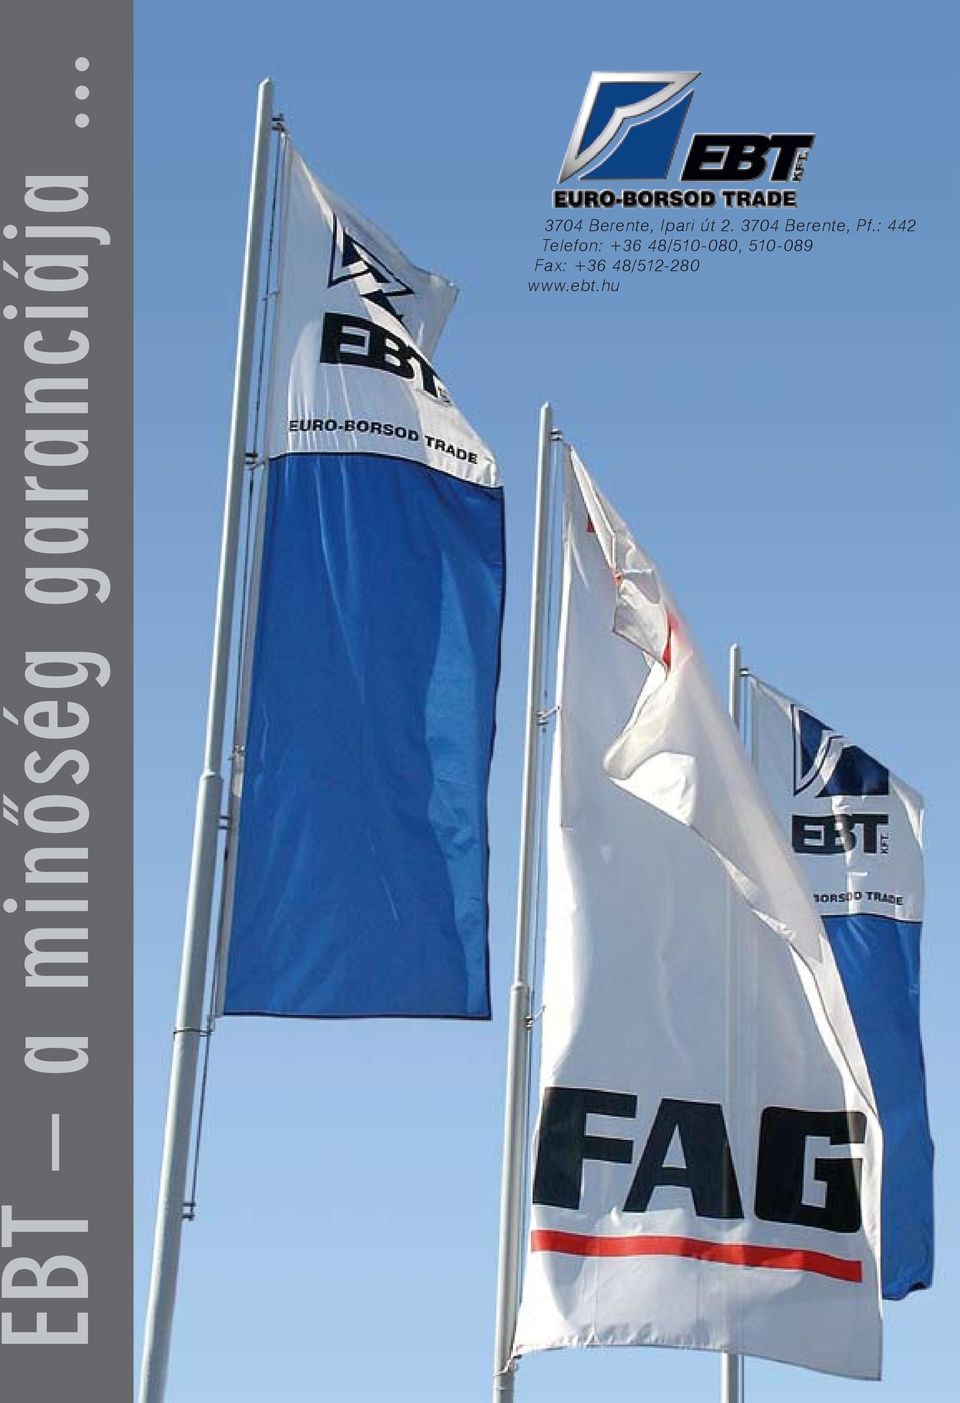 EBT a minőség garanciája Berente, Ipari út Berente, Pf.: 442 Telefon: / ,  Fax: / - PDF Free Download